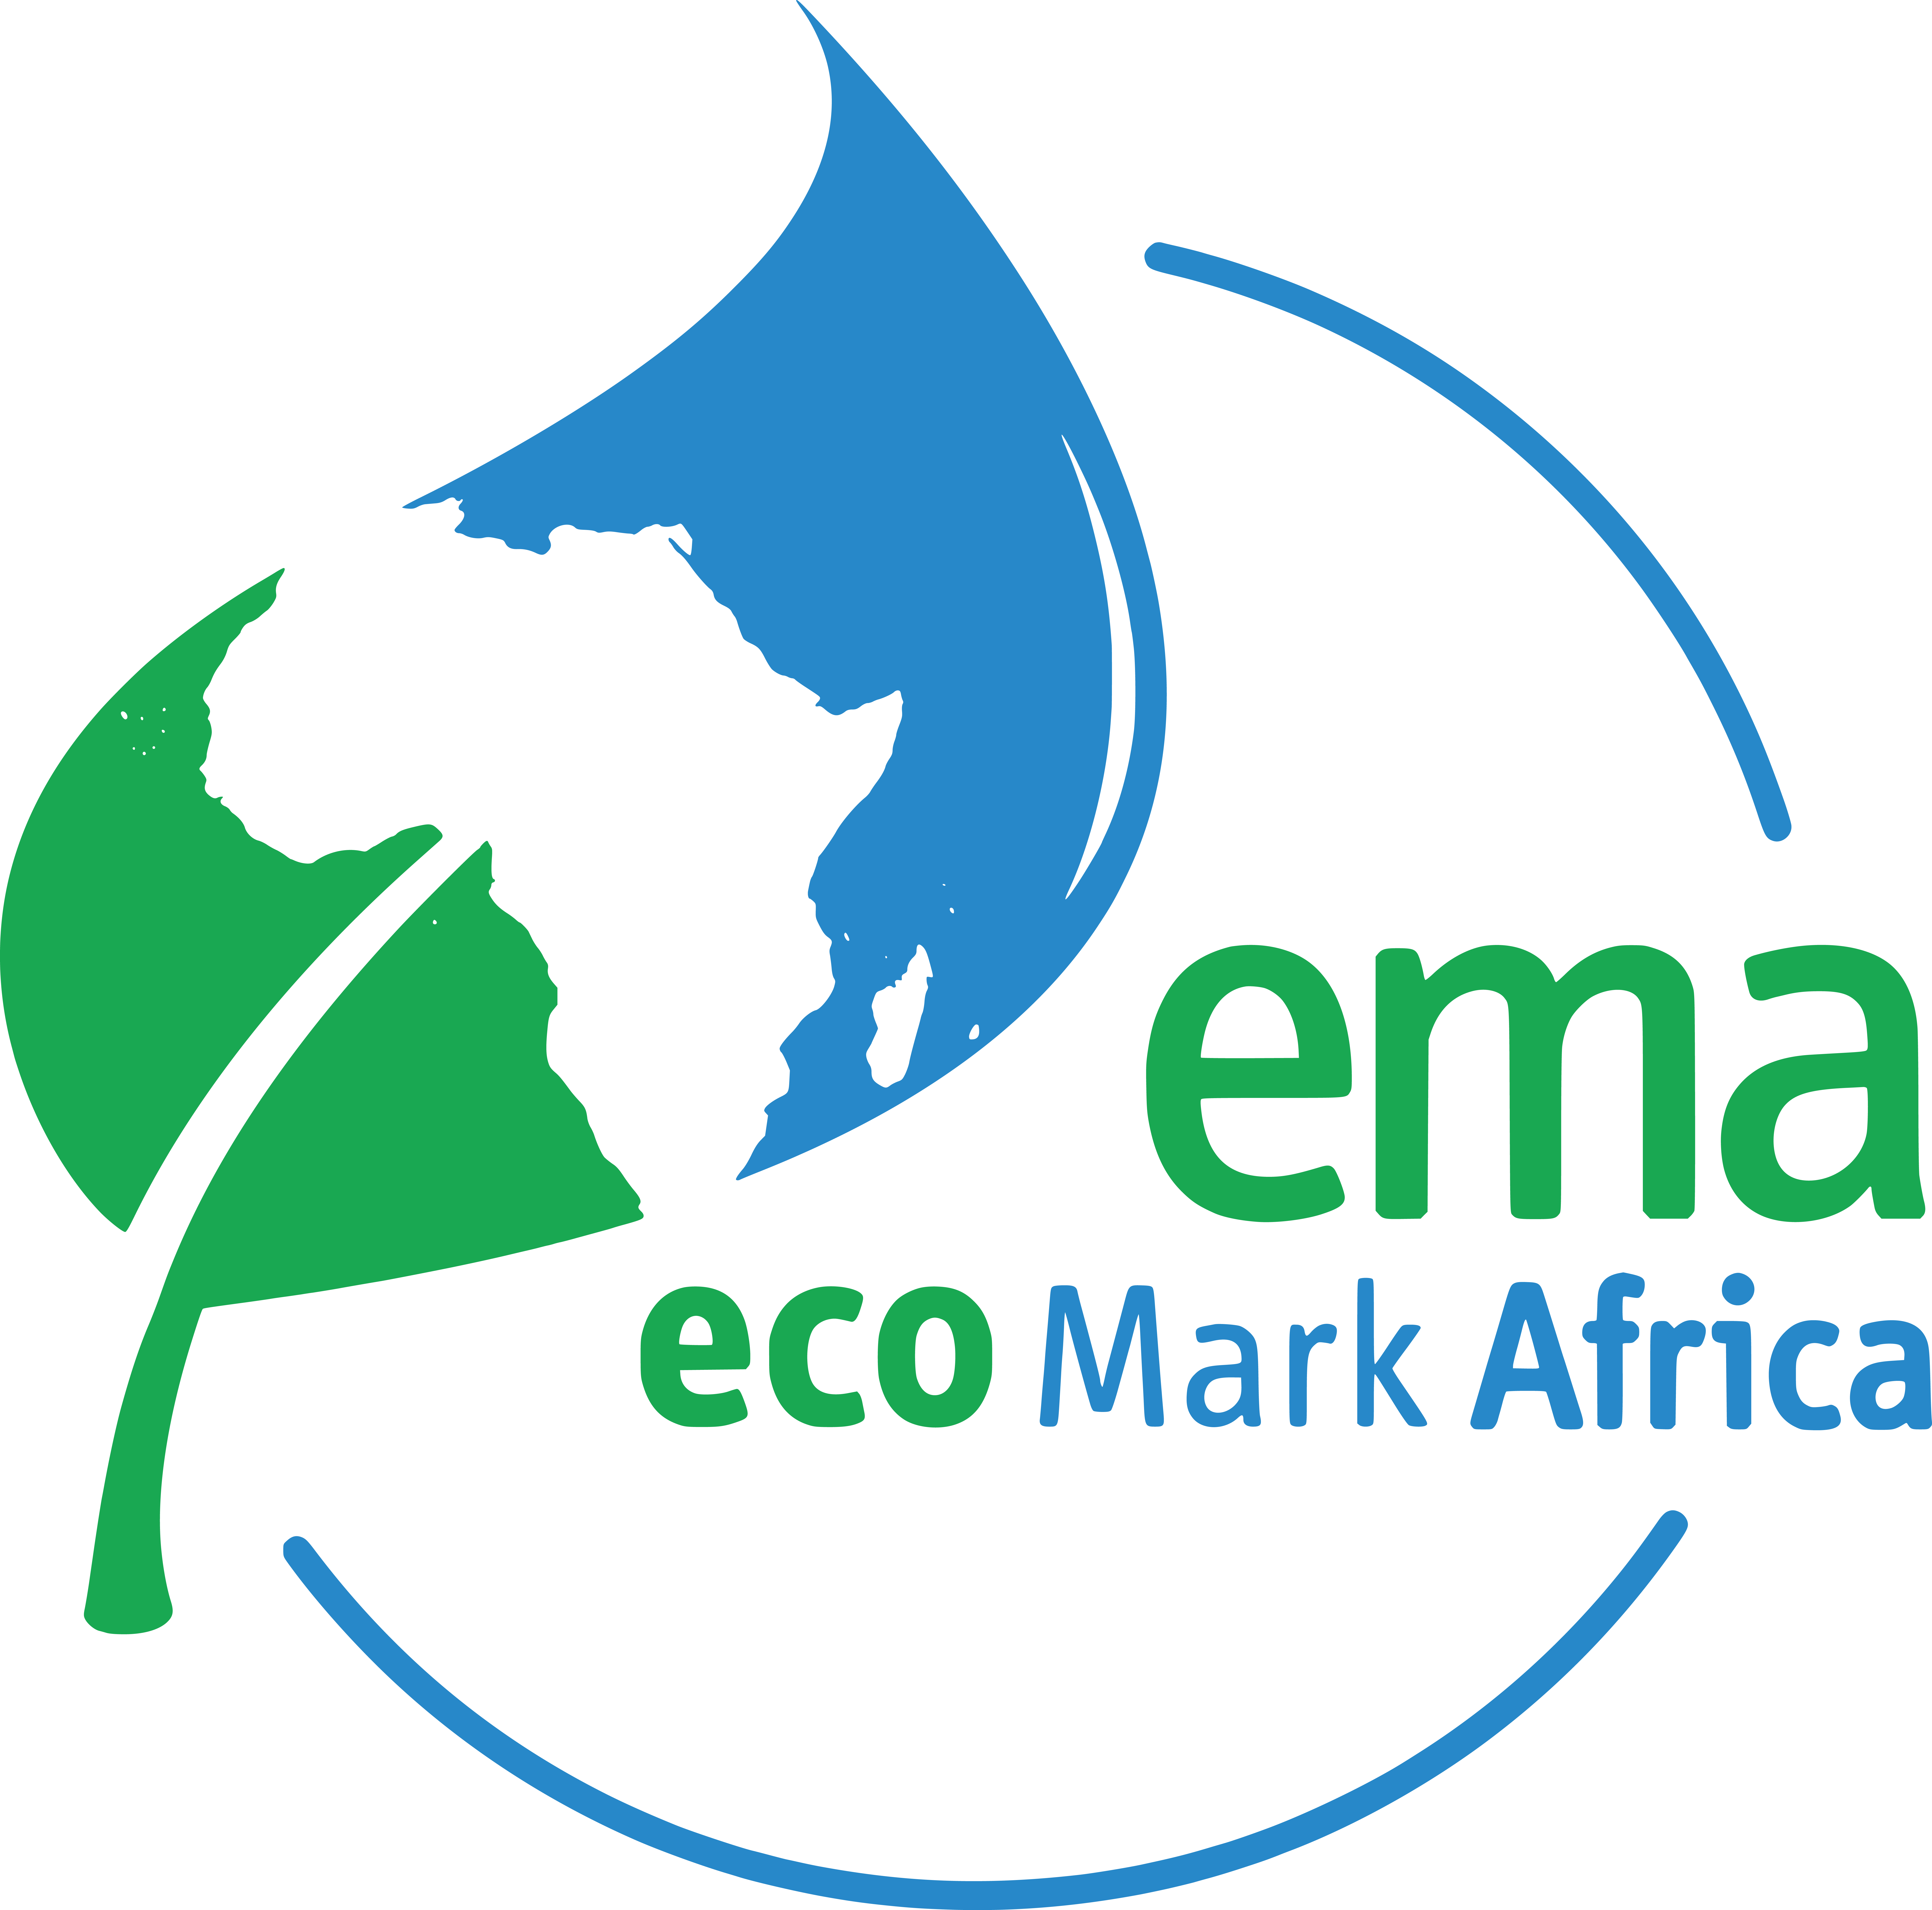 ECO Mark Africa